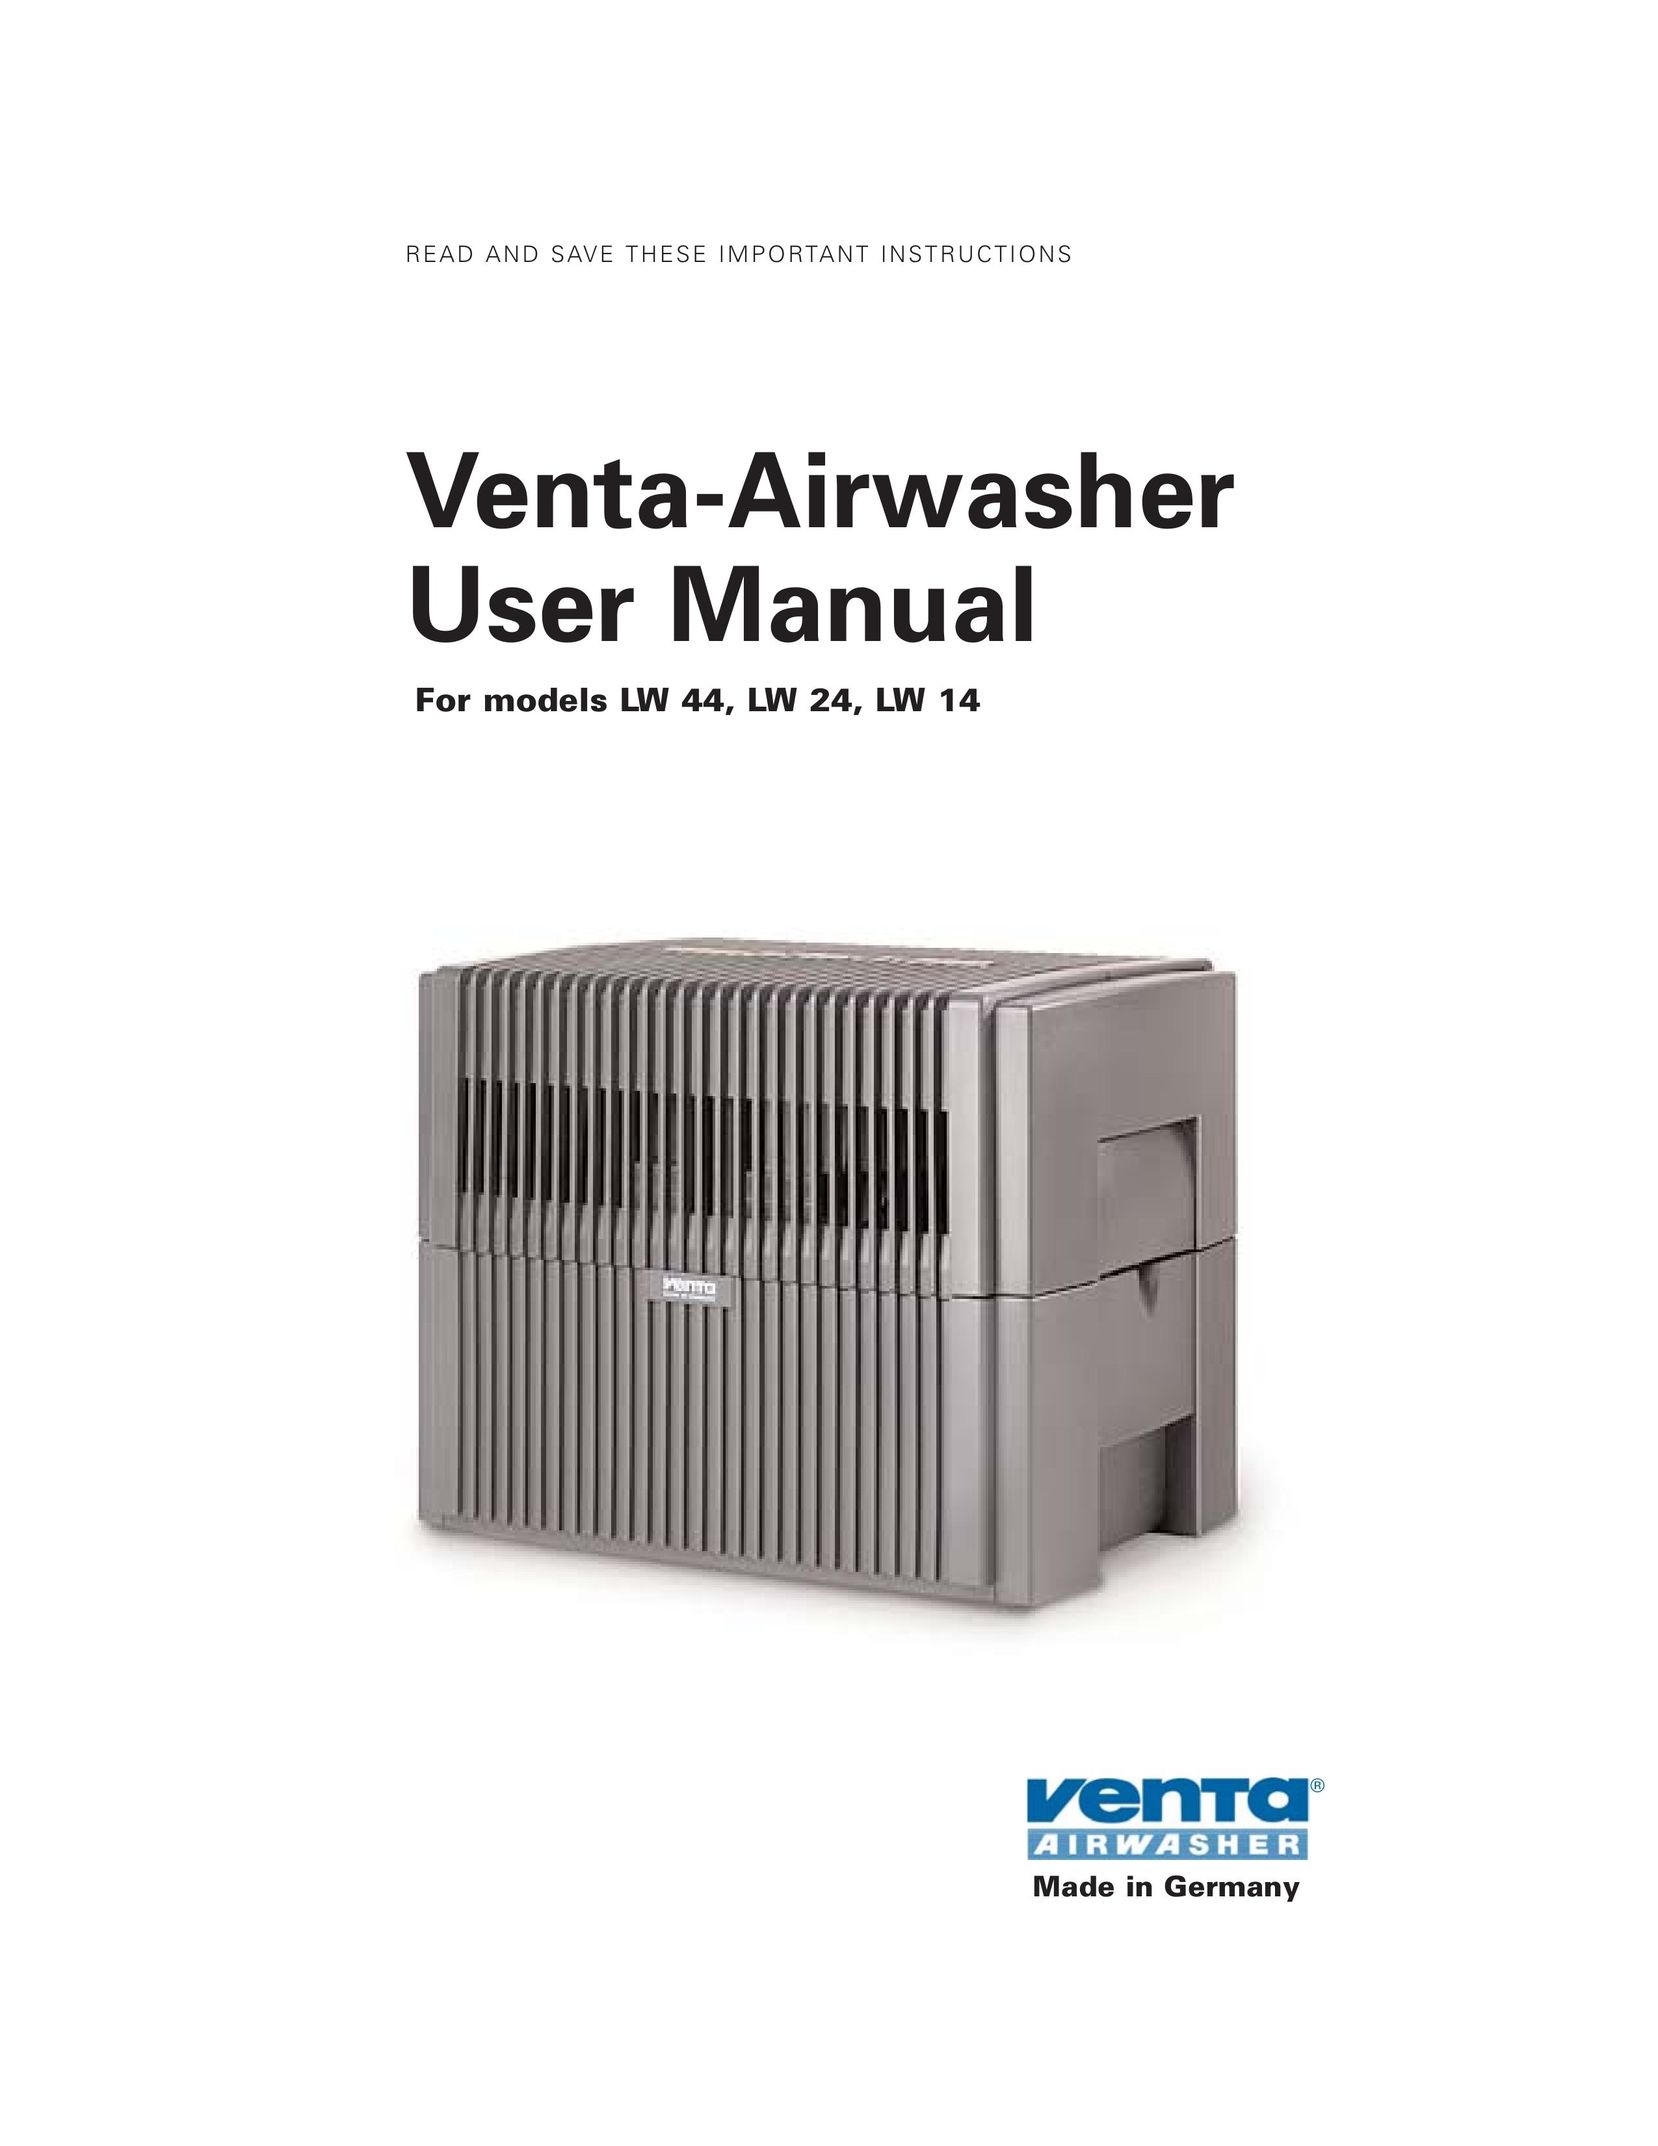 Venta Airwasher LW 44 Humidifier User Manual